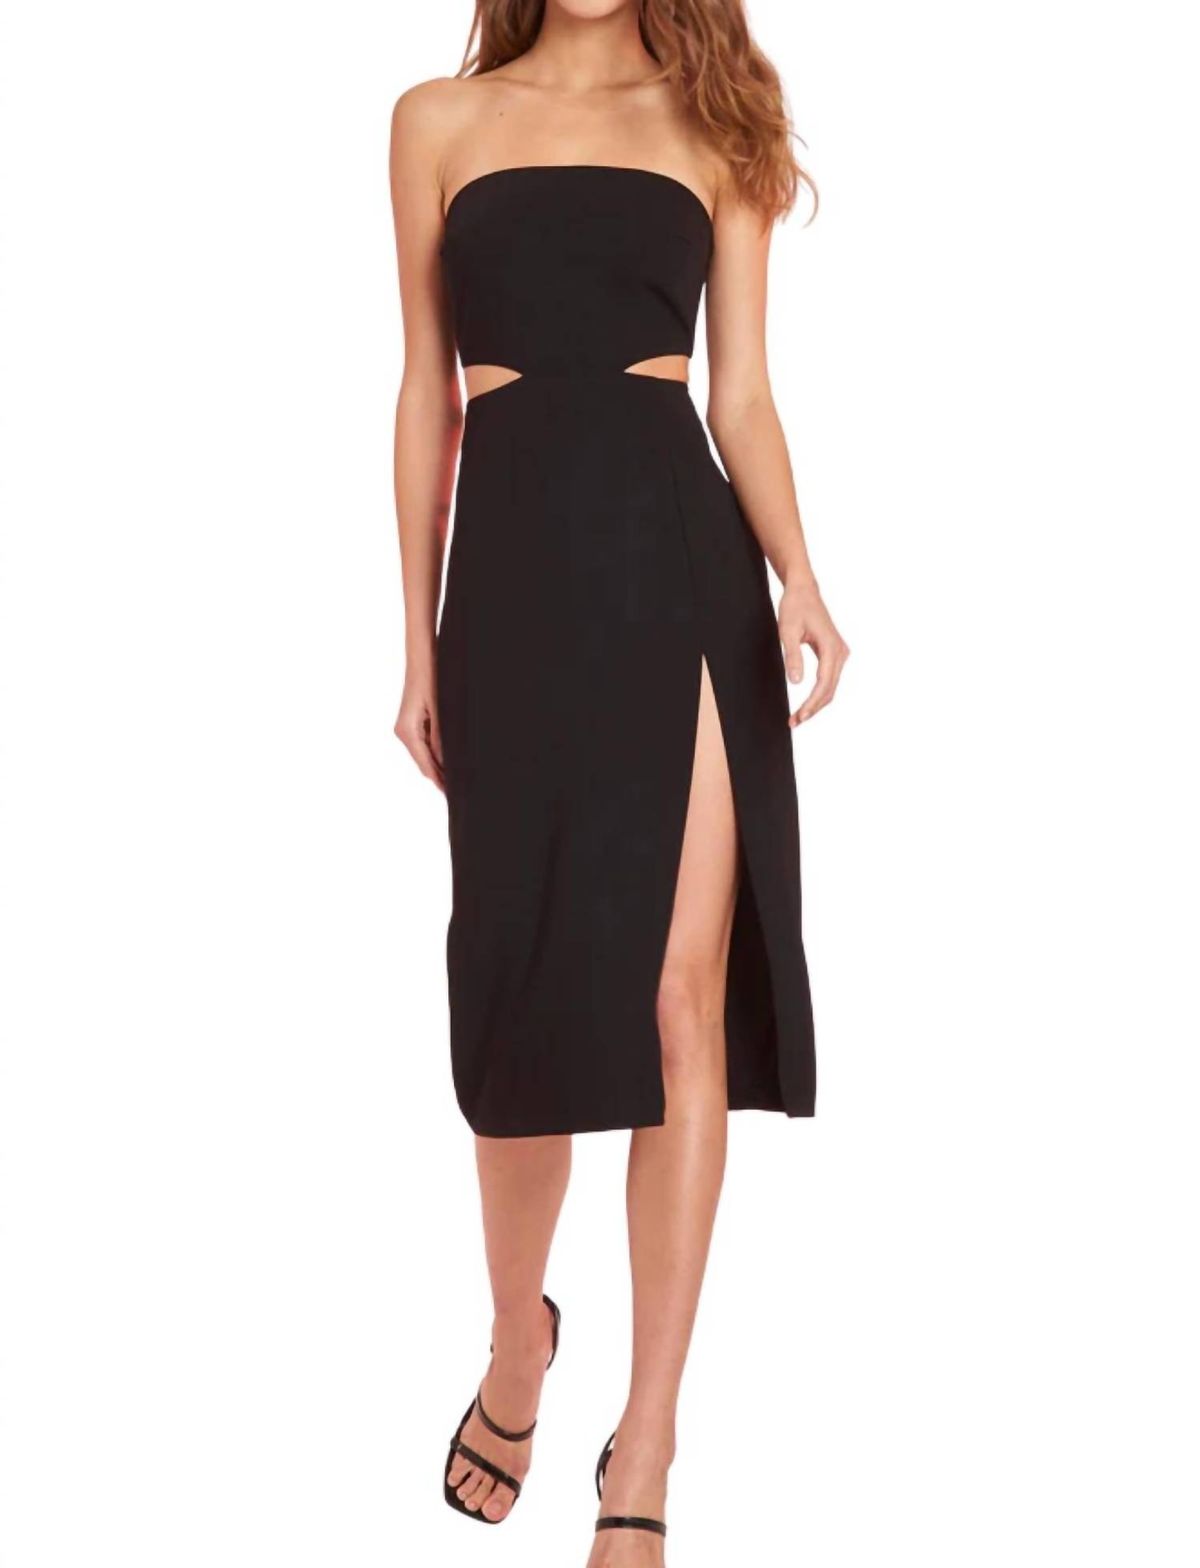 Style 1-2866584008-3855 Amanda Uprichard Size XS Black Side Slit Dress on Queenly